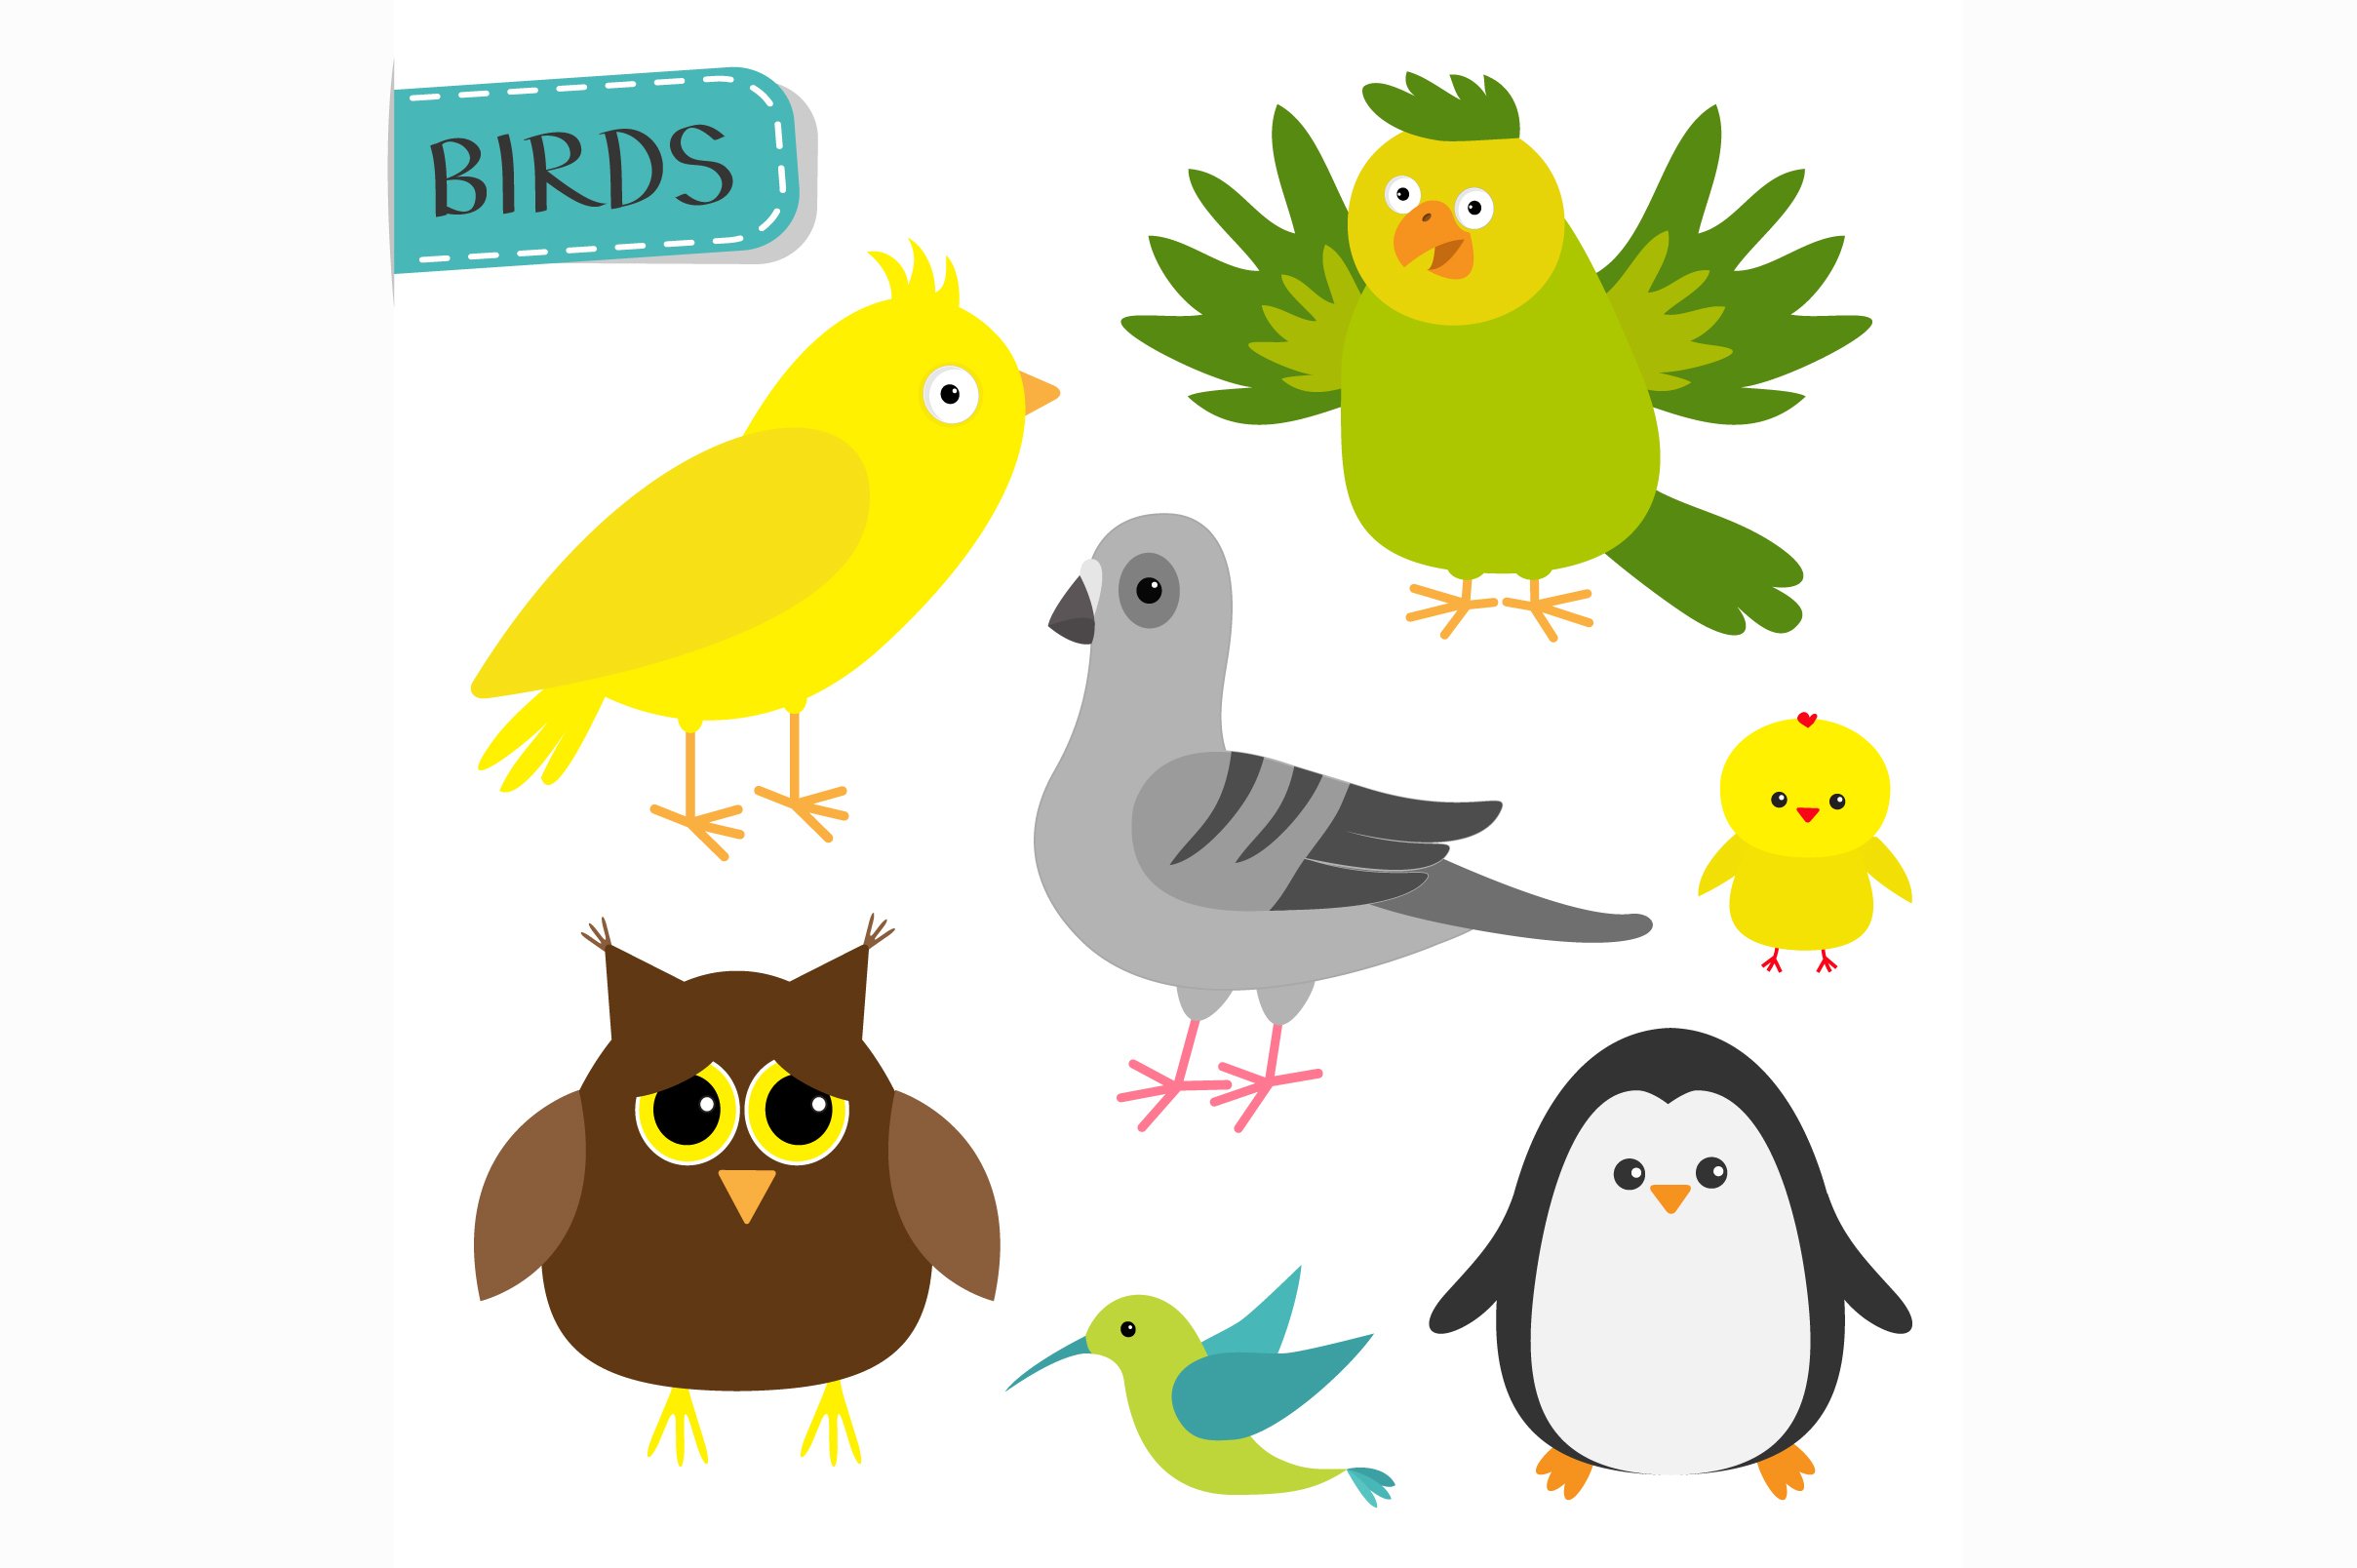 Diverse of birds illustrations.